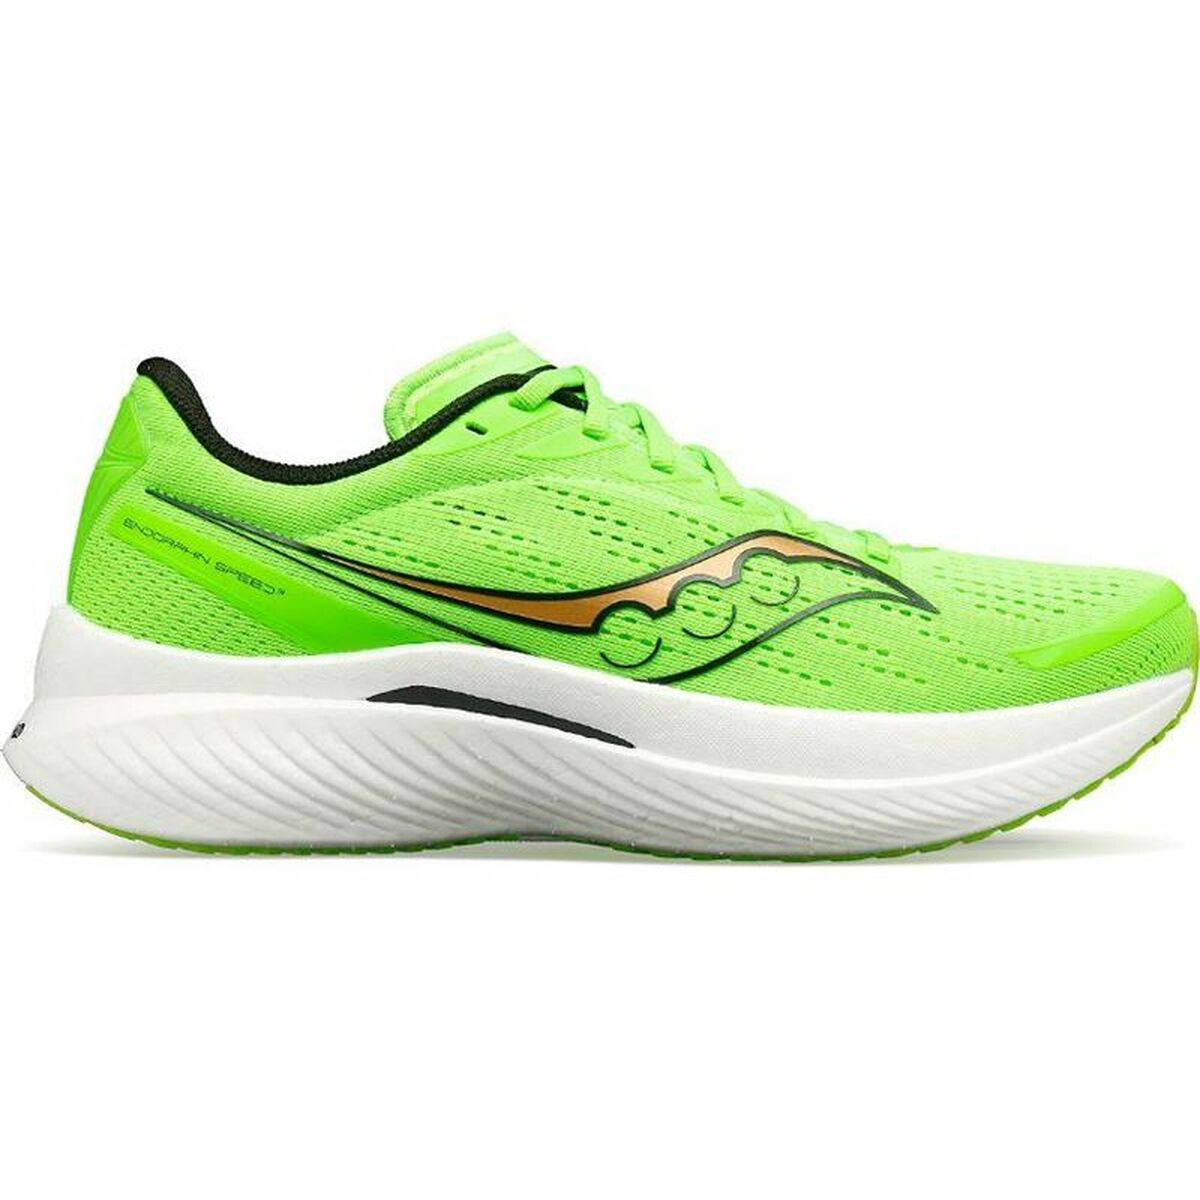 Chaussures de Running pour Adultes Saucony Endorphin Speed 3 Vert citron Homme